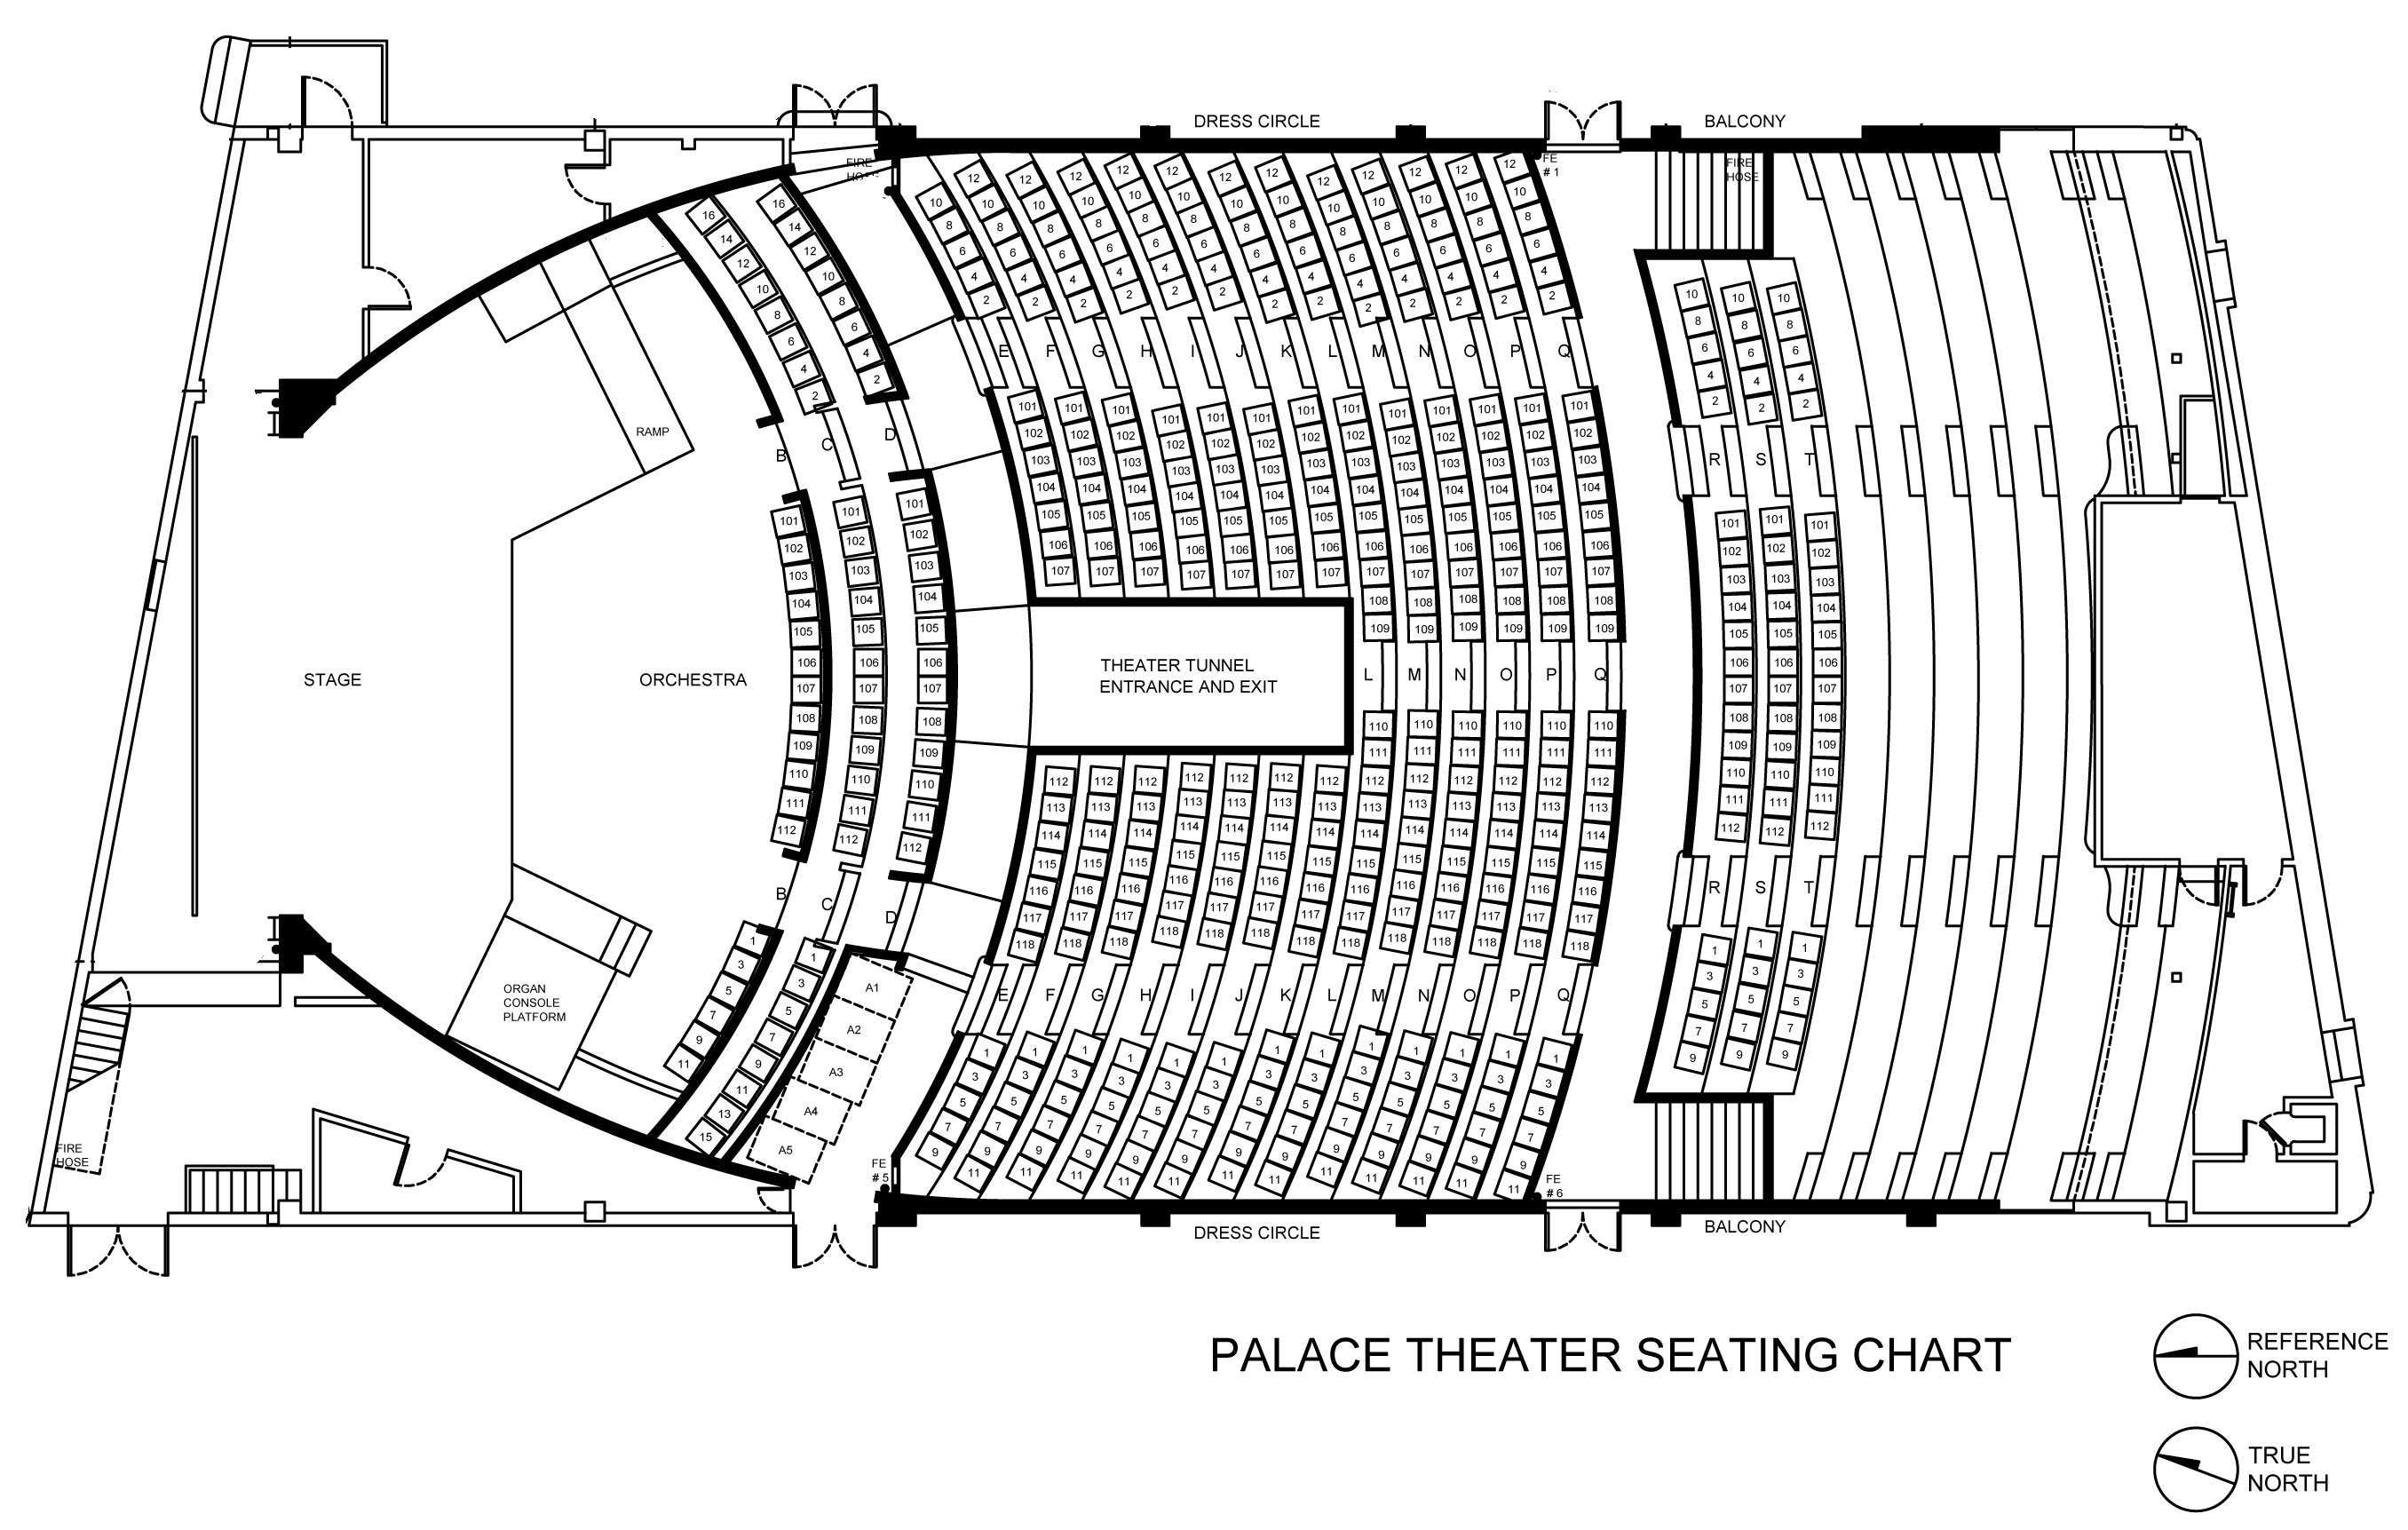 The Historic Palace Theater boasts nearly 500 seats.